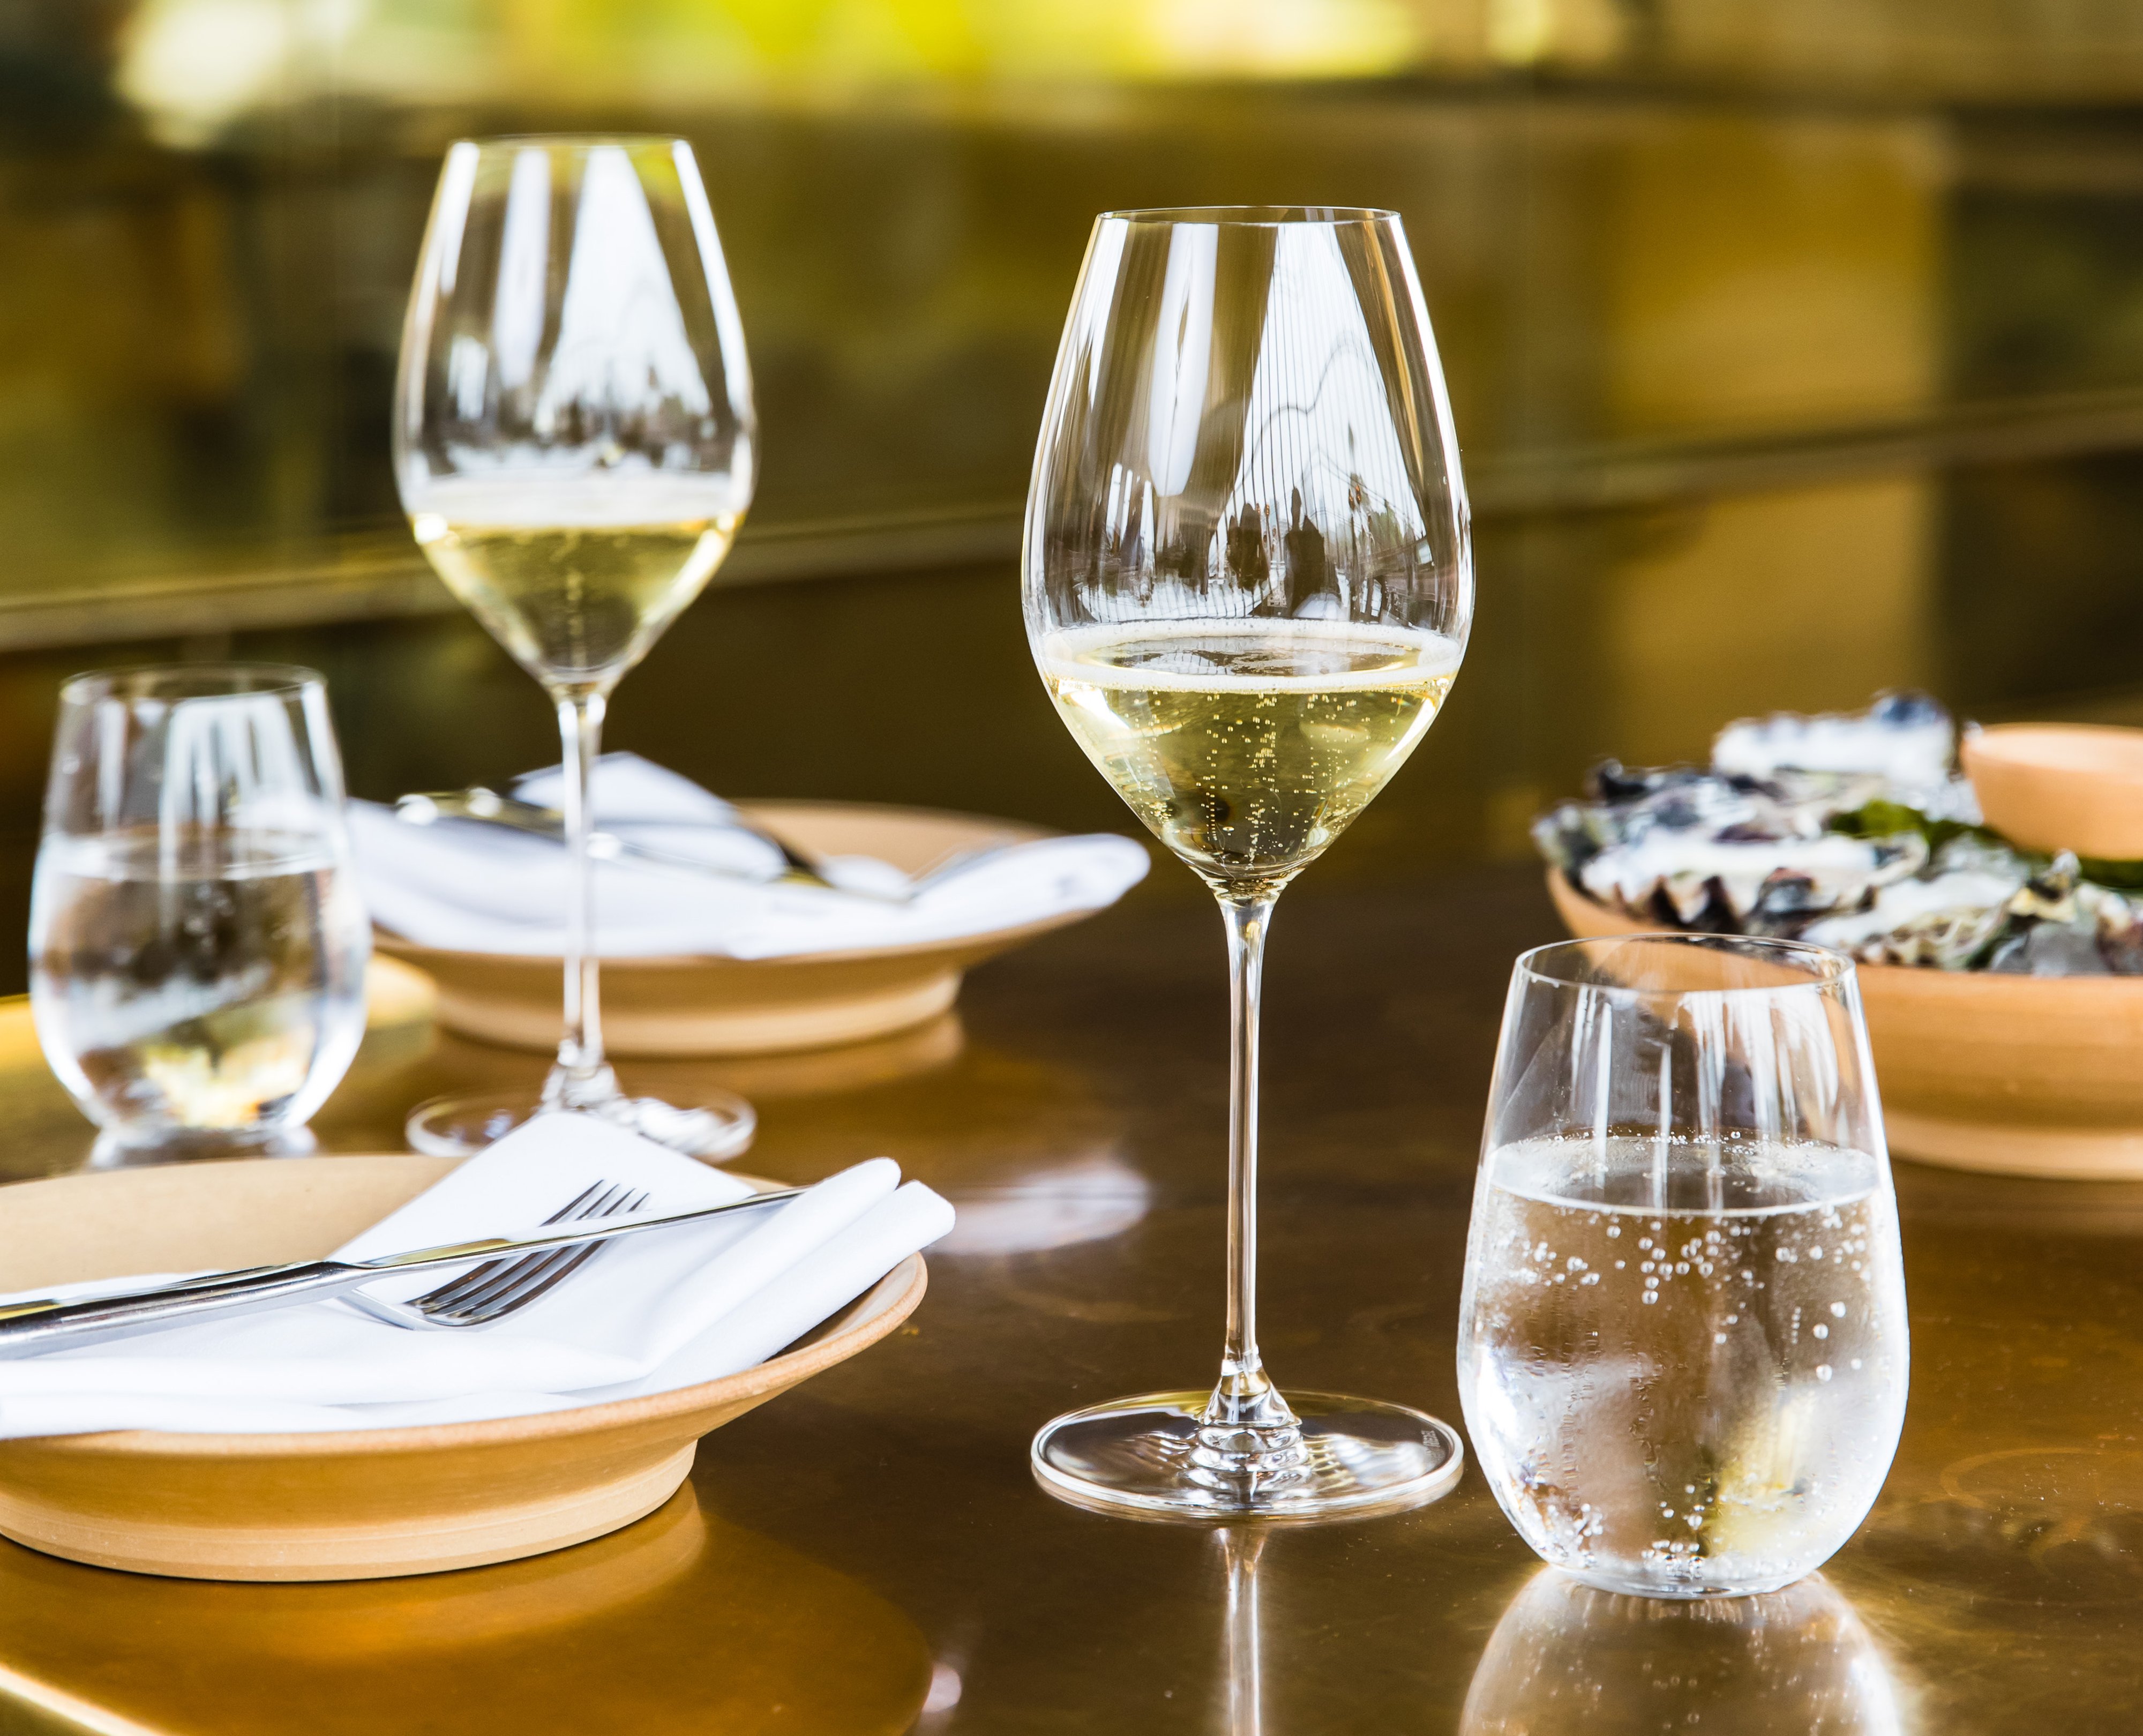 Wine Glass Guide – the Riedel Veritas Line